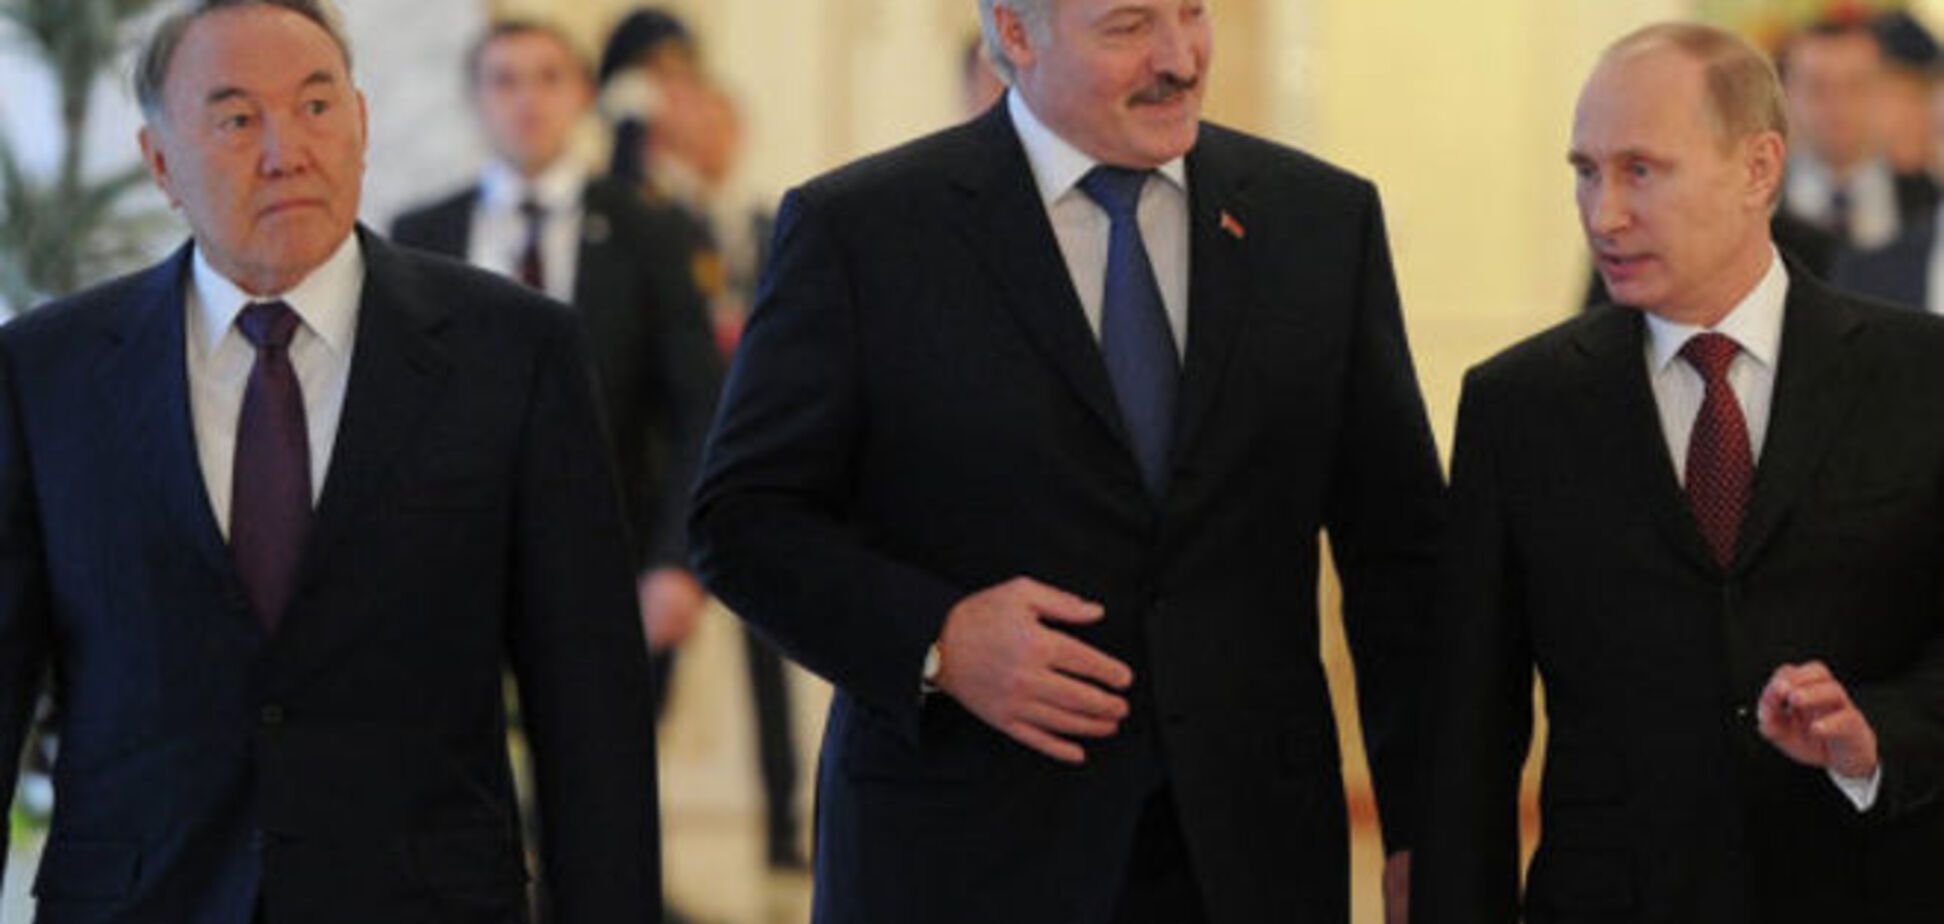 Встречу Путина, Назарбаева и Лукашенко перенесли